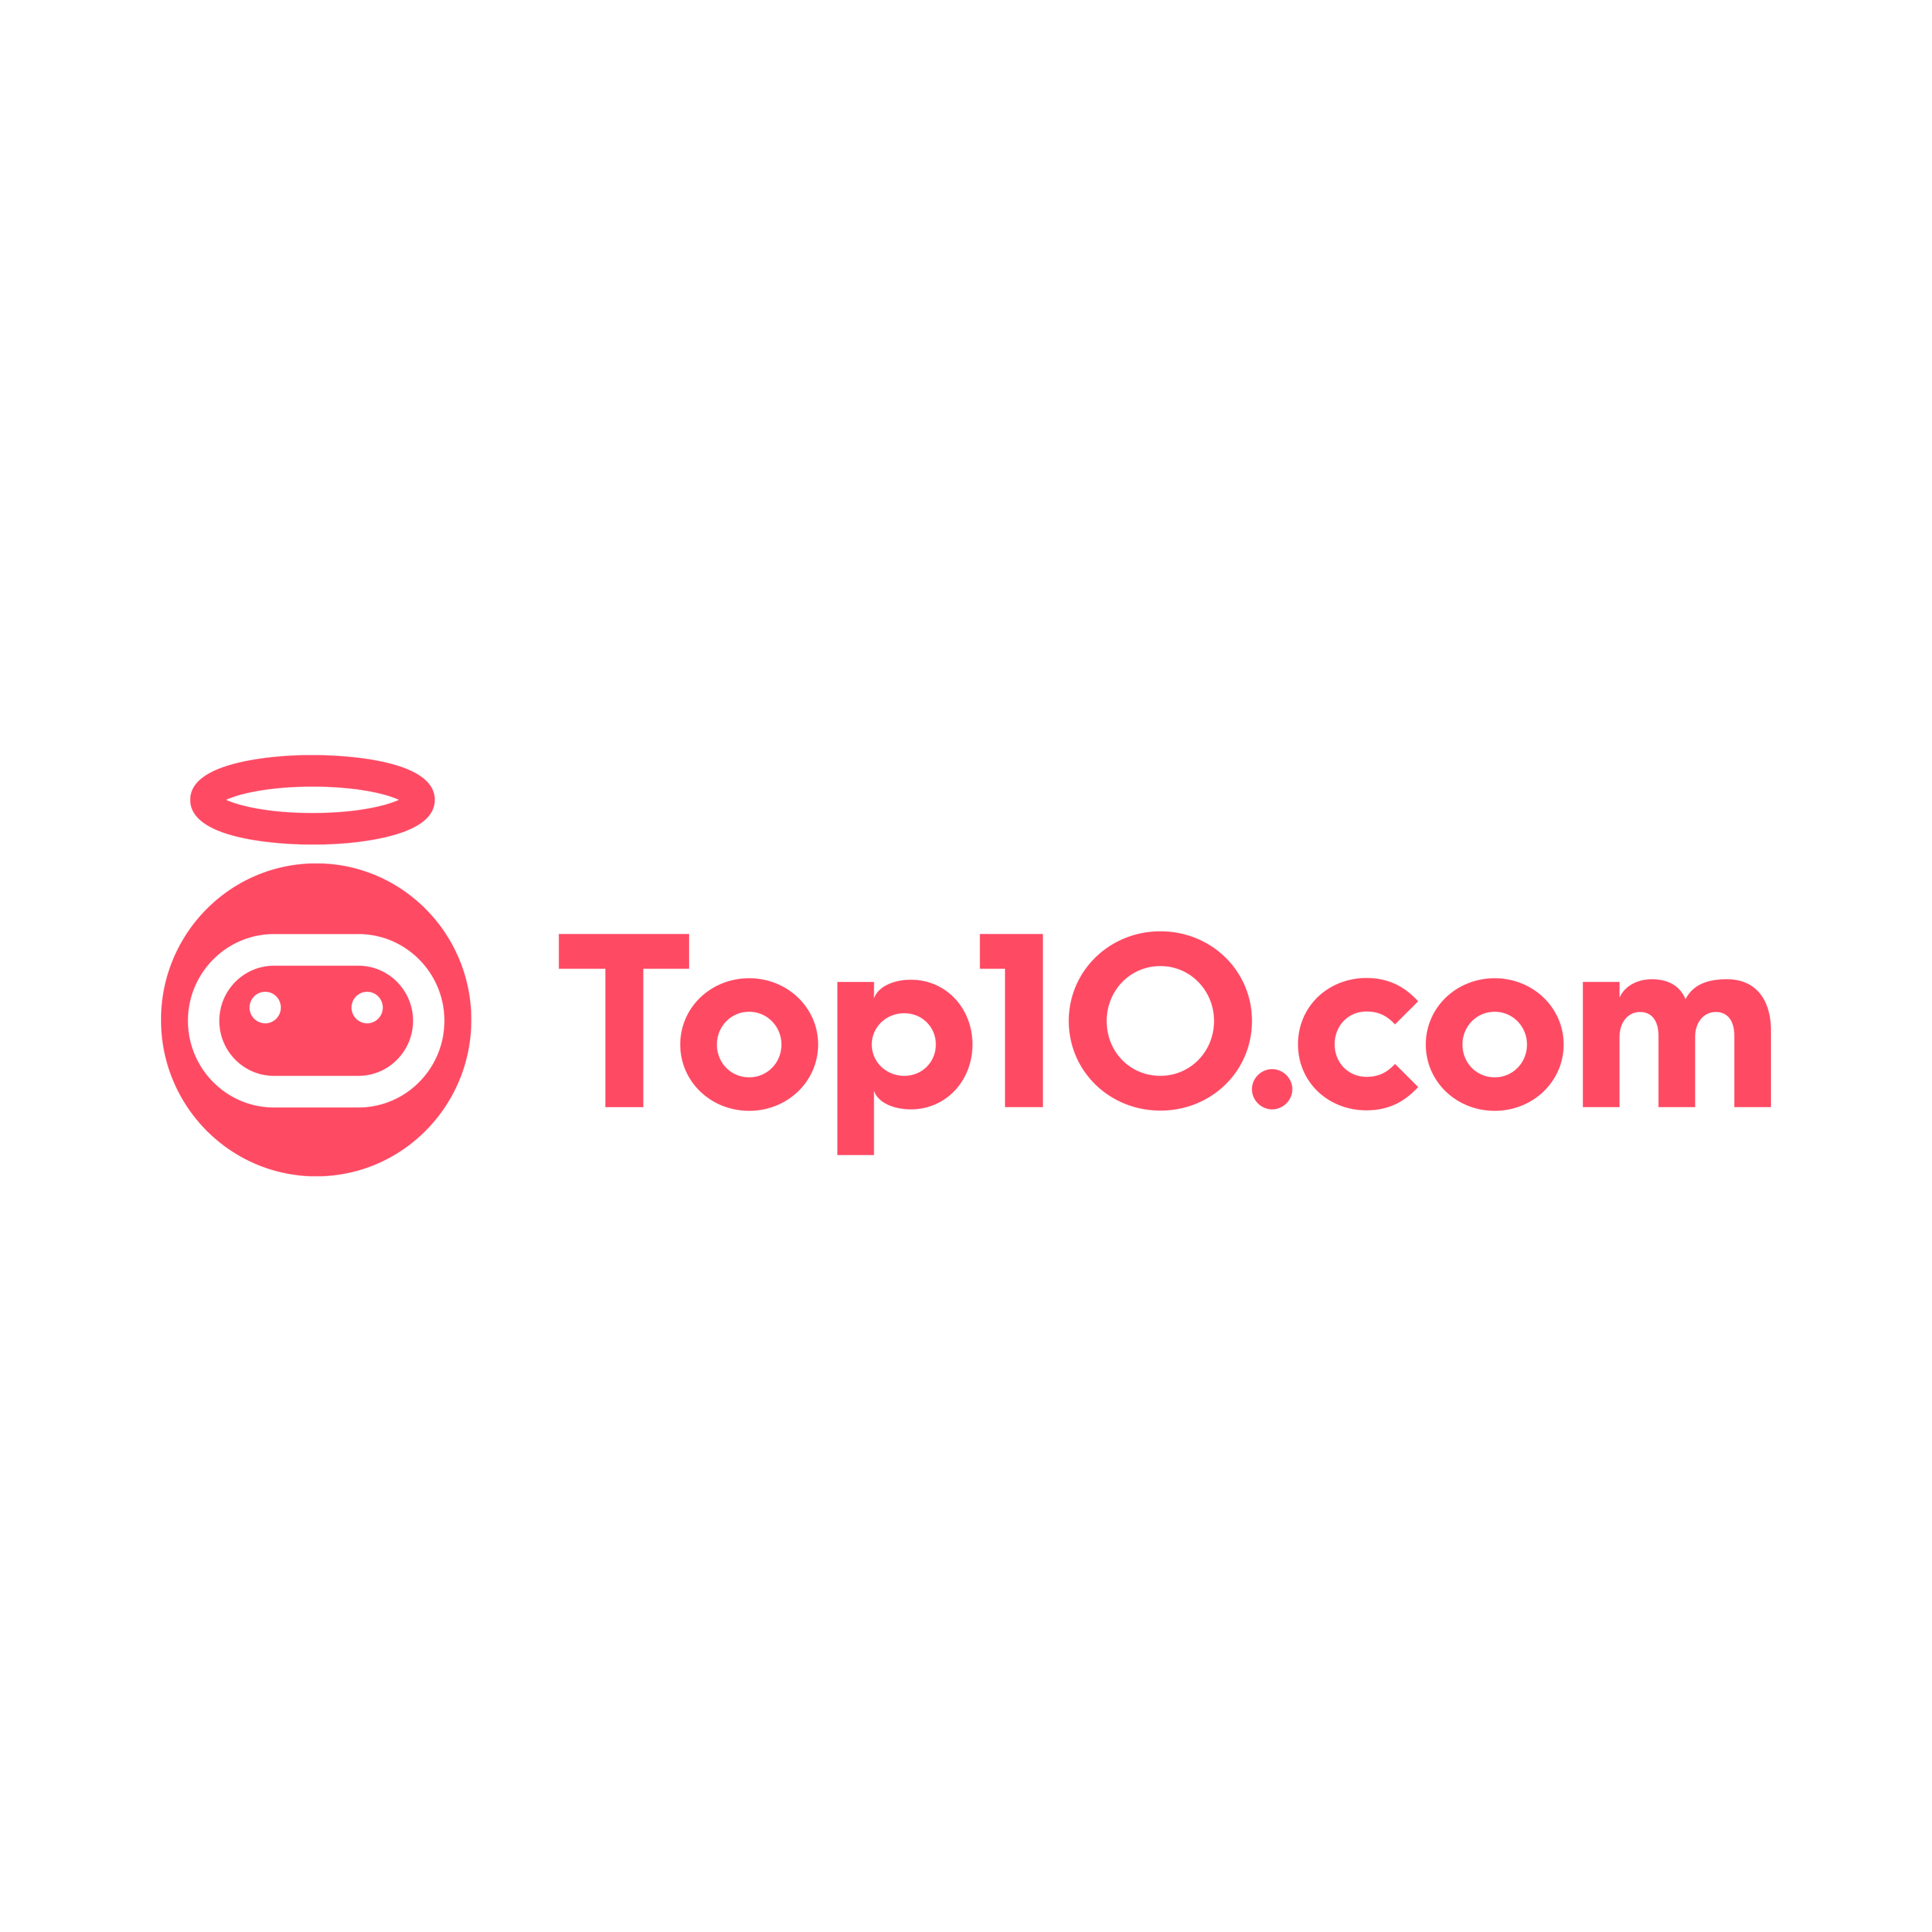 Top10.com Logo Transparent Picture